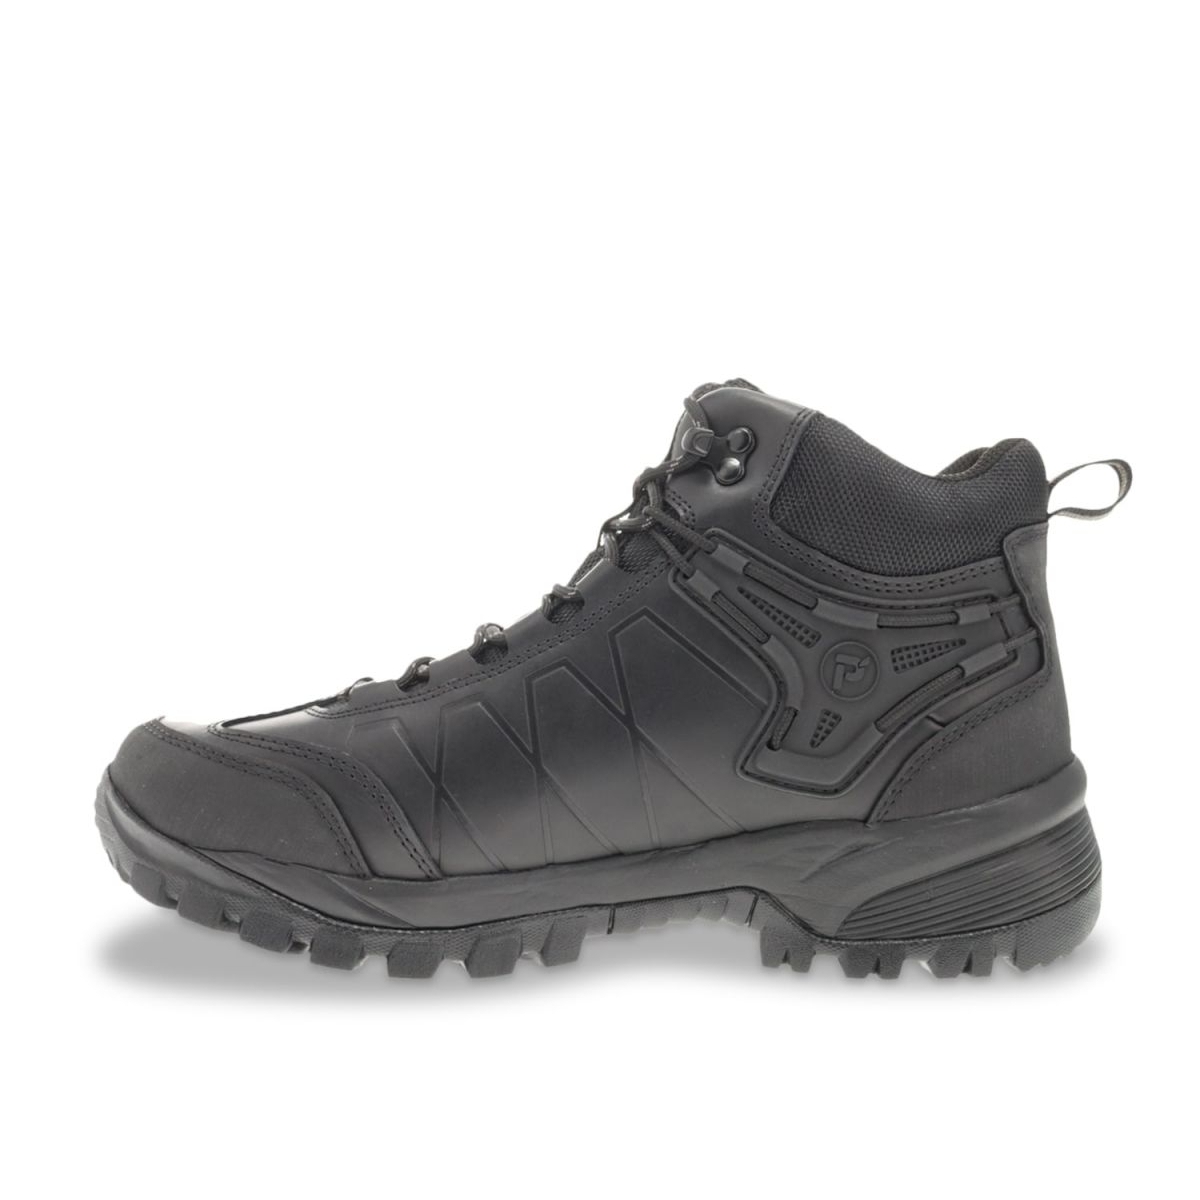 Propet Men's Ridge Walker Force Hiking Boots Black - MBA052LBLK BLACK - BLACK, 8.5 Wide